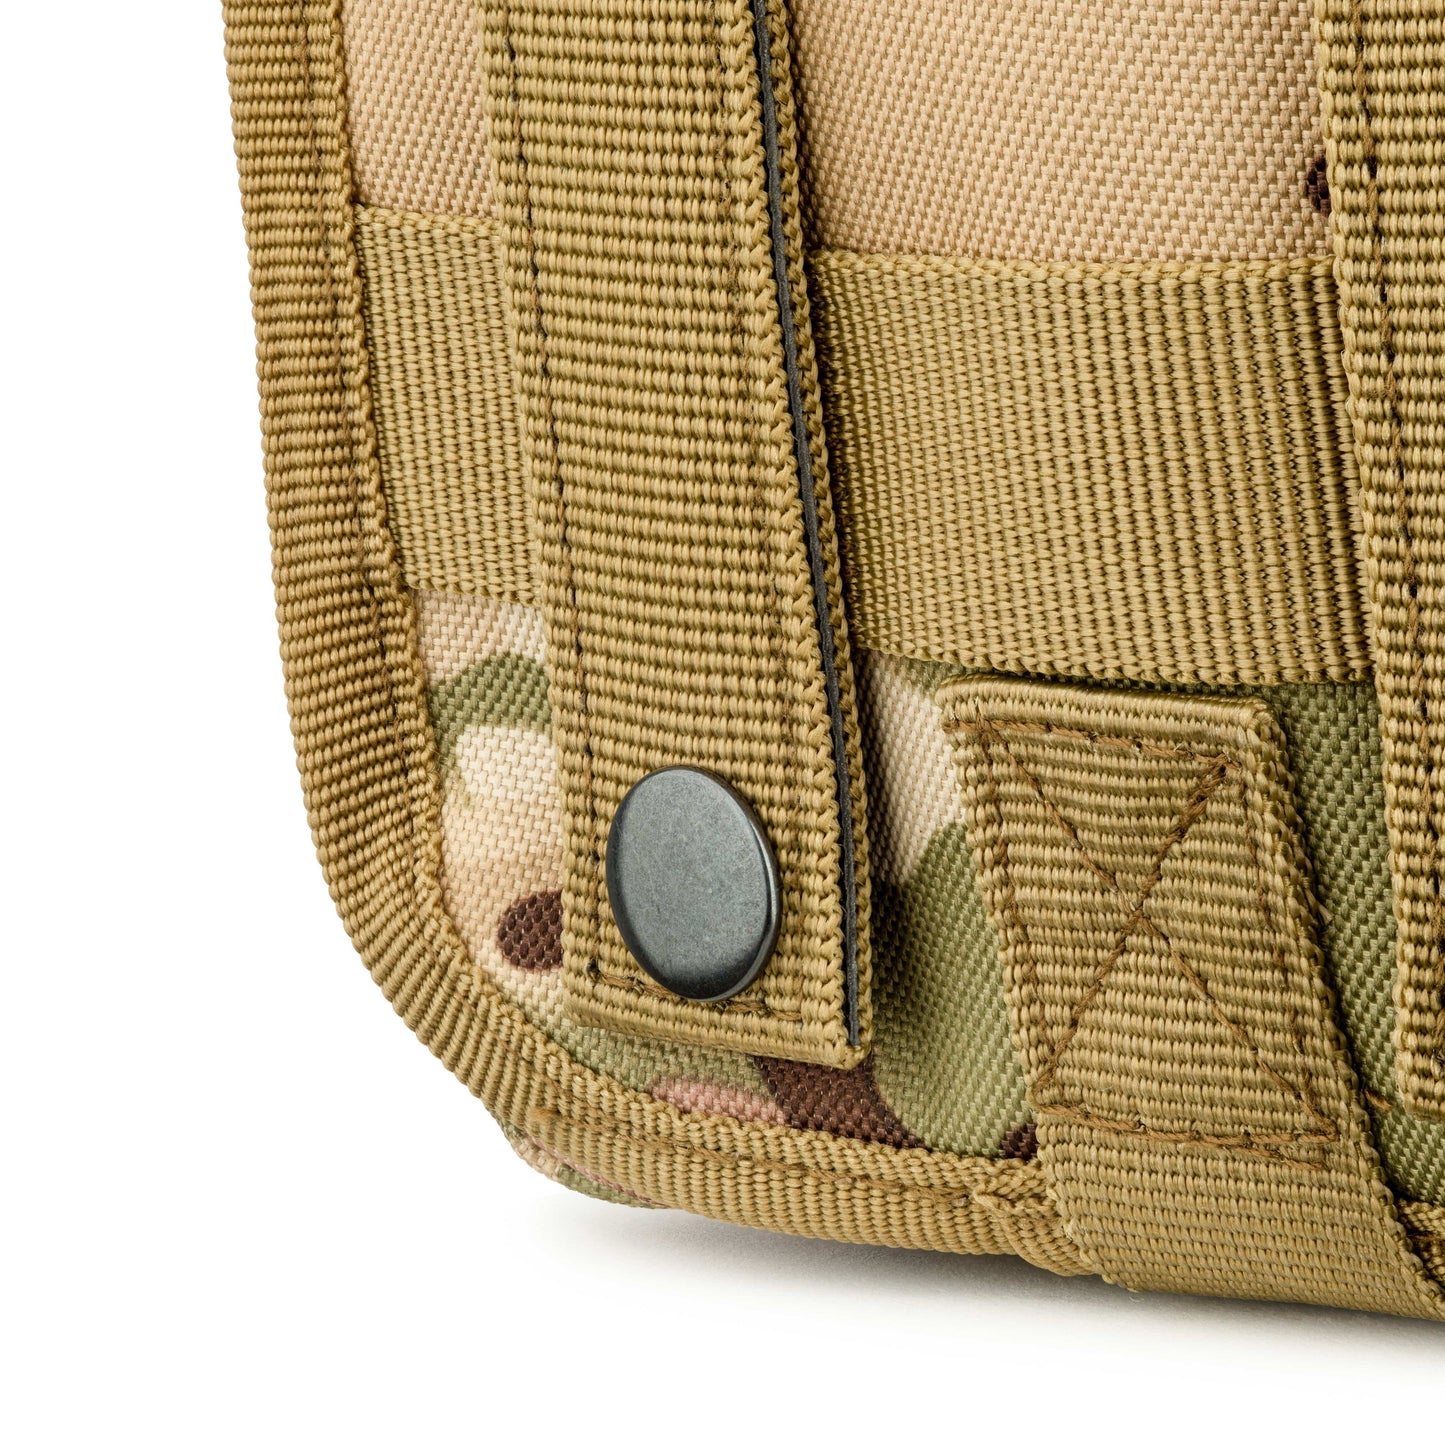 Chief Miller First Aid Kits Scherber Premium IFAK Kit Trauma Pack - Fully Stocked Apparel